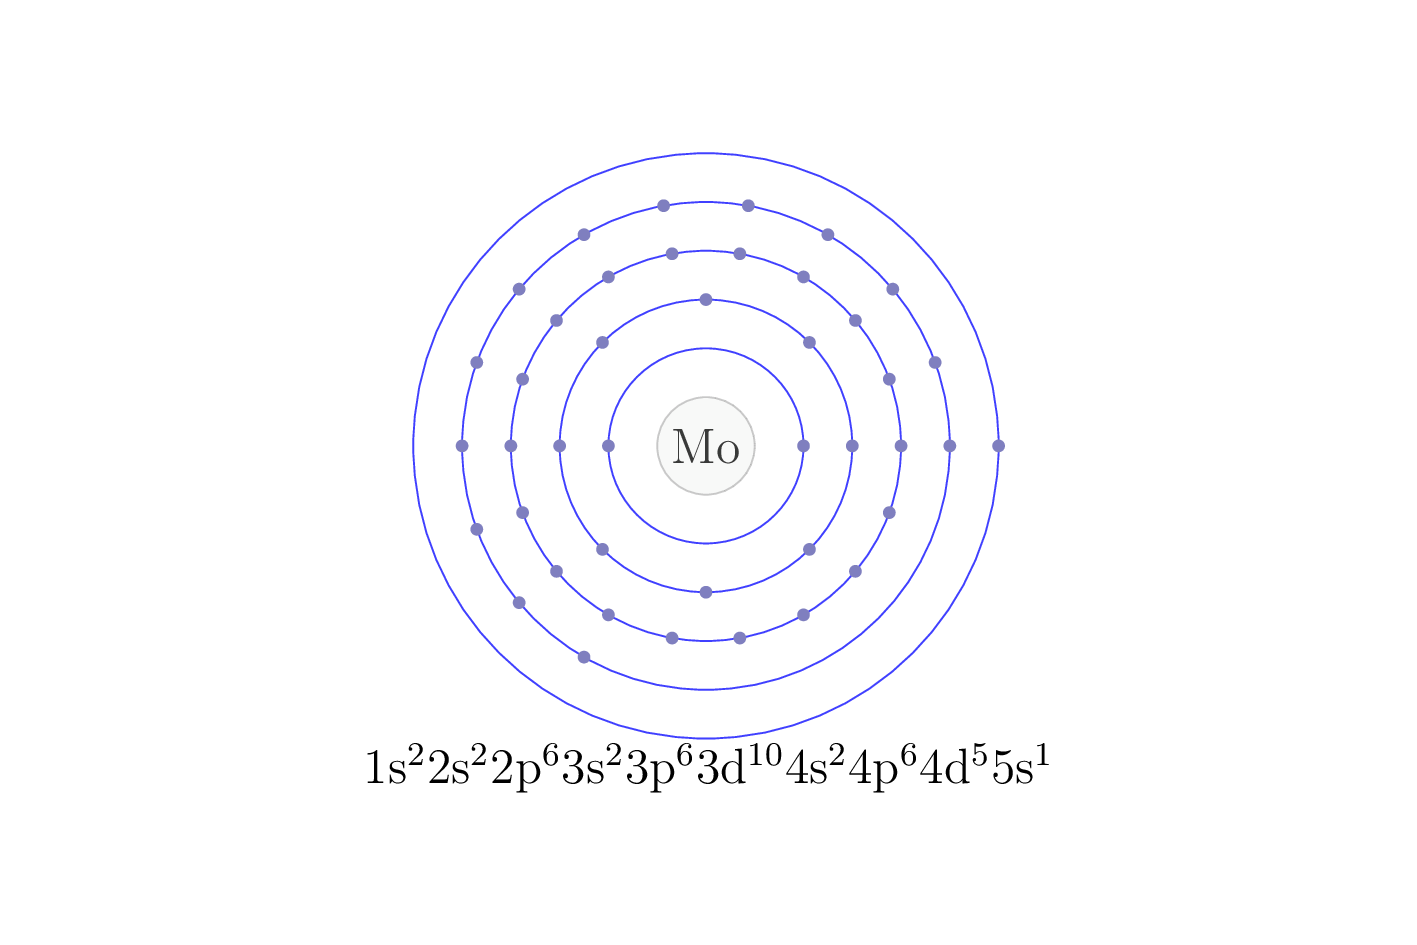 electron configuration of element Mo